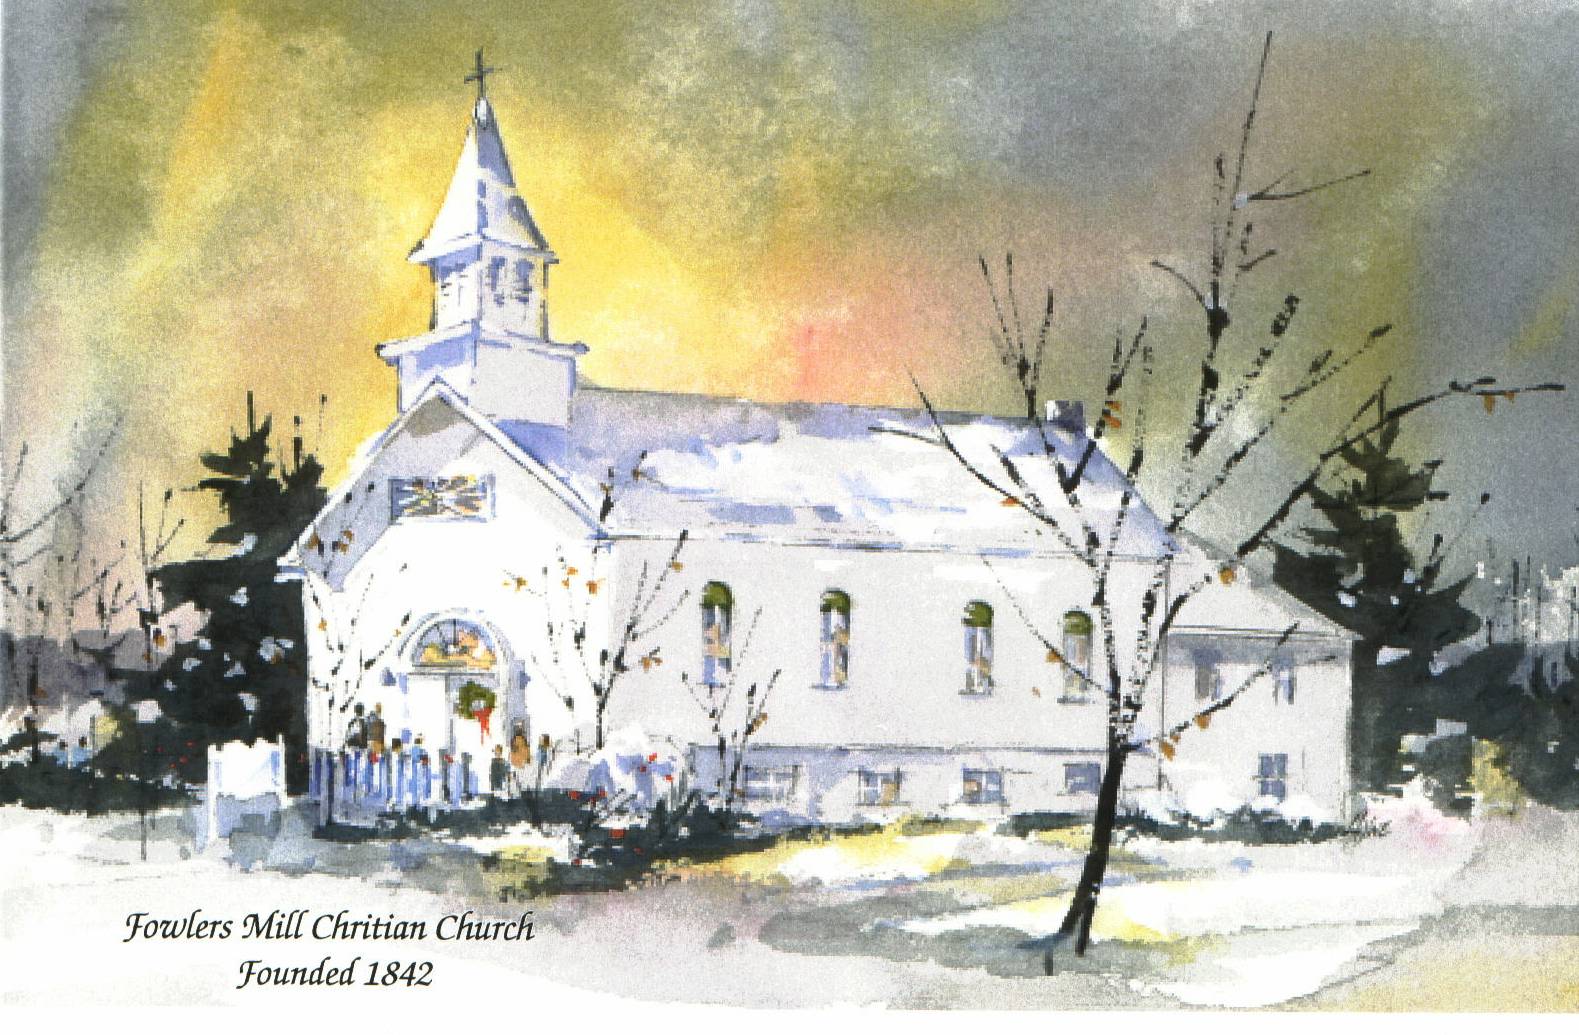 Fowlers Mill Christian Church